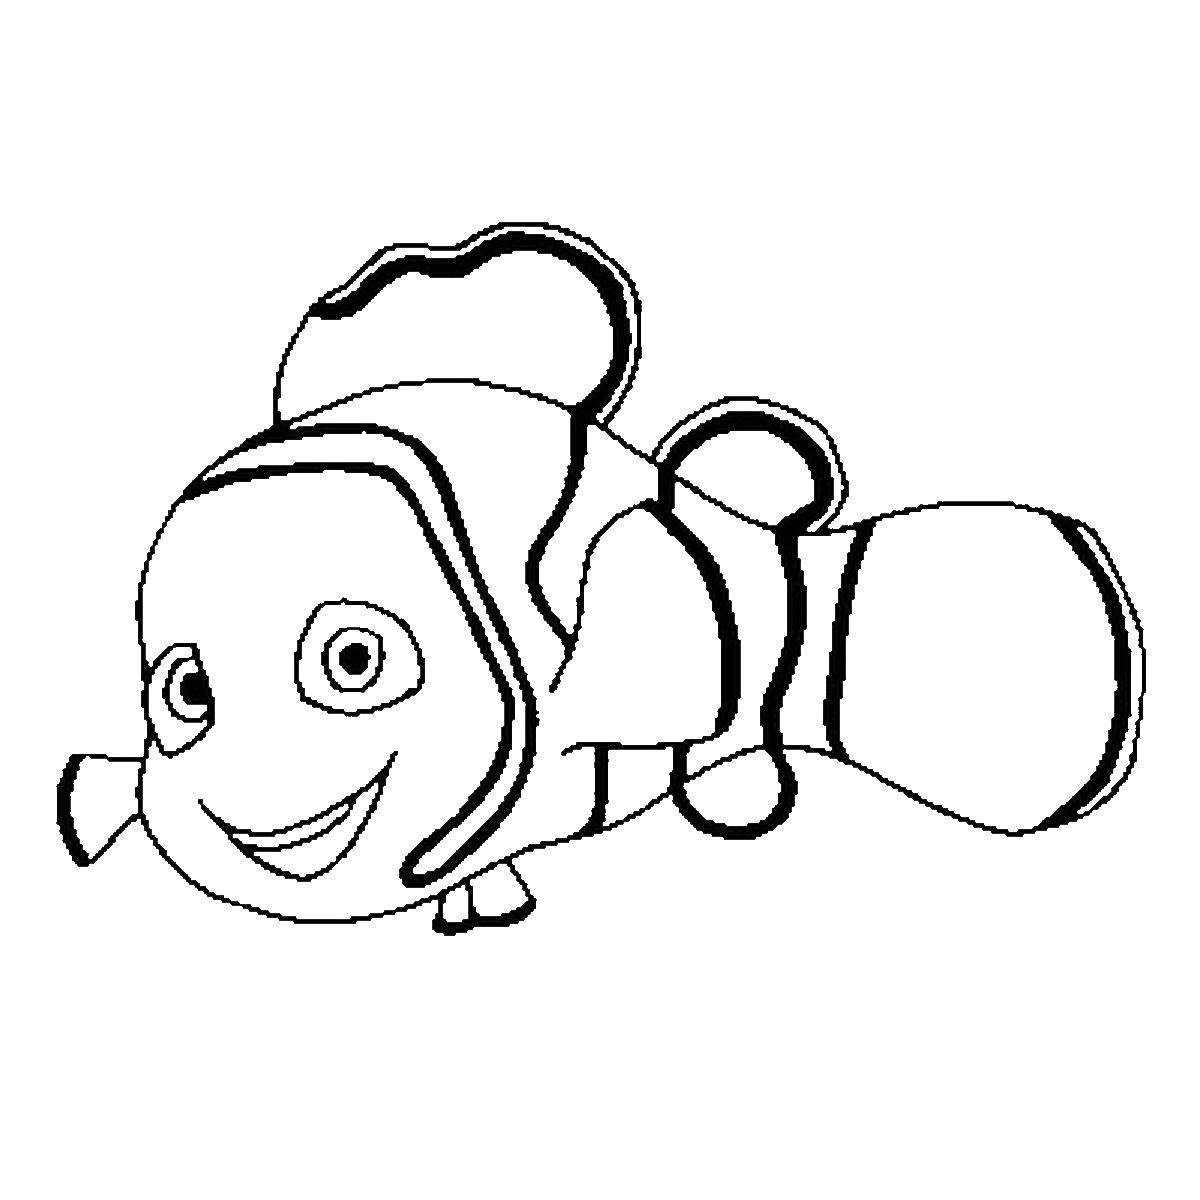 Coloring Nemo cartoon finding Nemo . Category Cartoon character. Tags:  Underwater world, fish, Nemo.